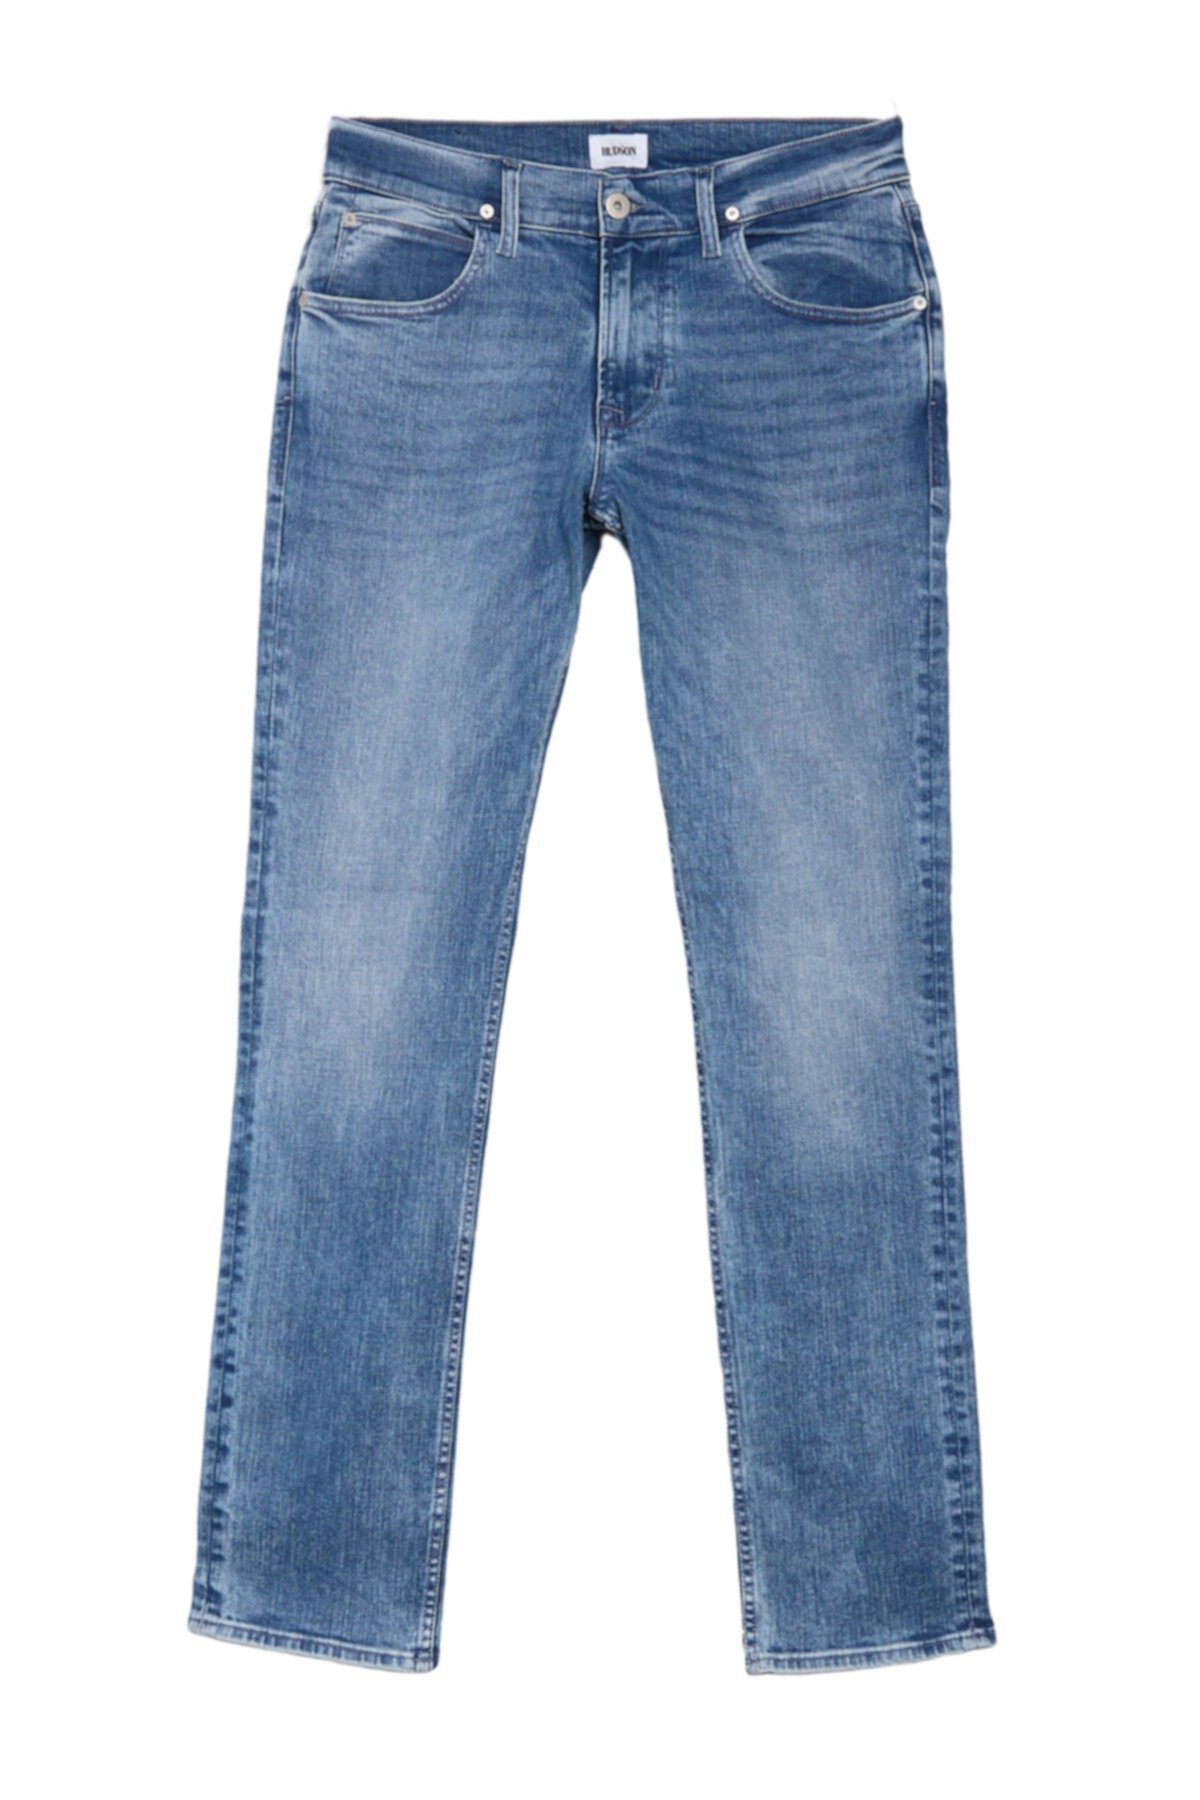 Прямые джинсы с молнией Blake Slim Hudson Jeans